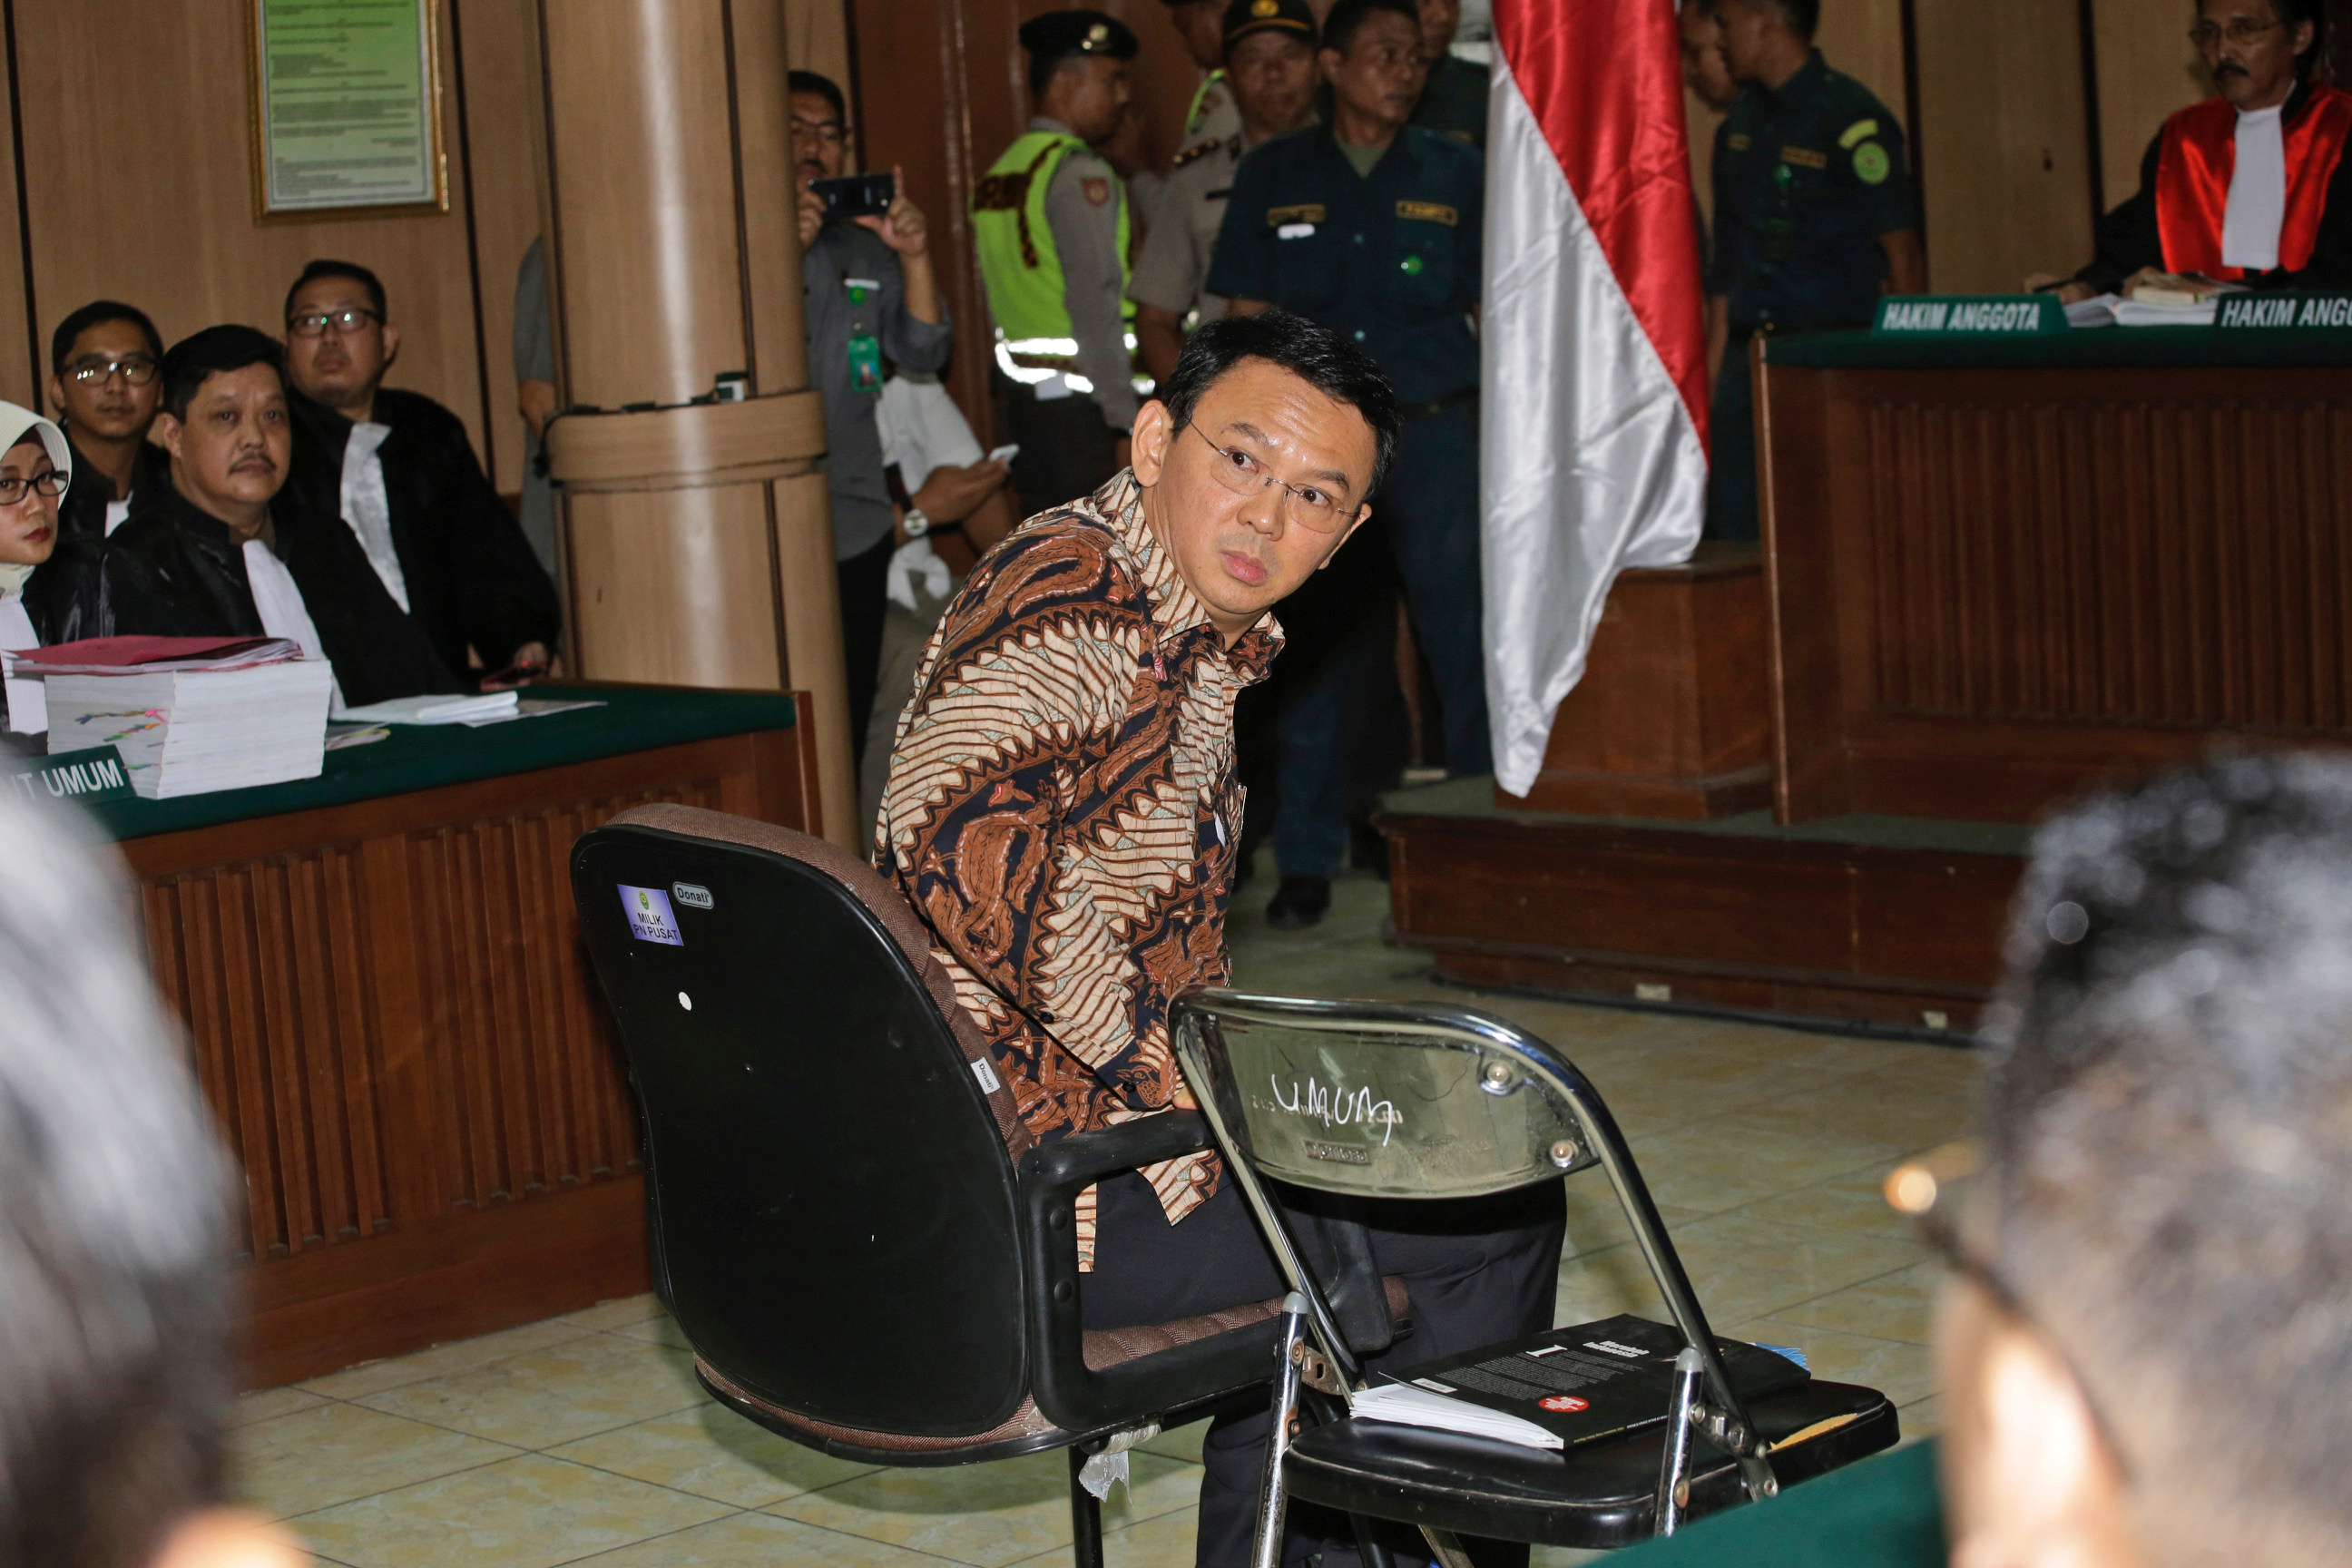 Gubernur Jakarta Basuki Tjahaja Purnama, lebih dikenal sebagai "Ahok", duduk di kursi terpidana saat sidang kasus penistaan agama mulai di Pengadilan Negeri Jakarta Utara, di Jakarta, pada tanggal 13 Desember 2016 (Pool—Reuters)